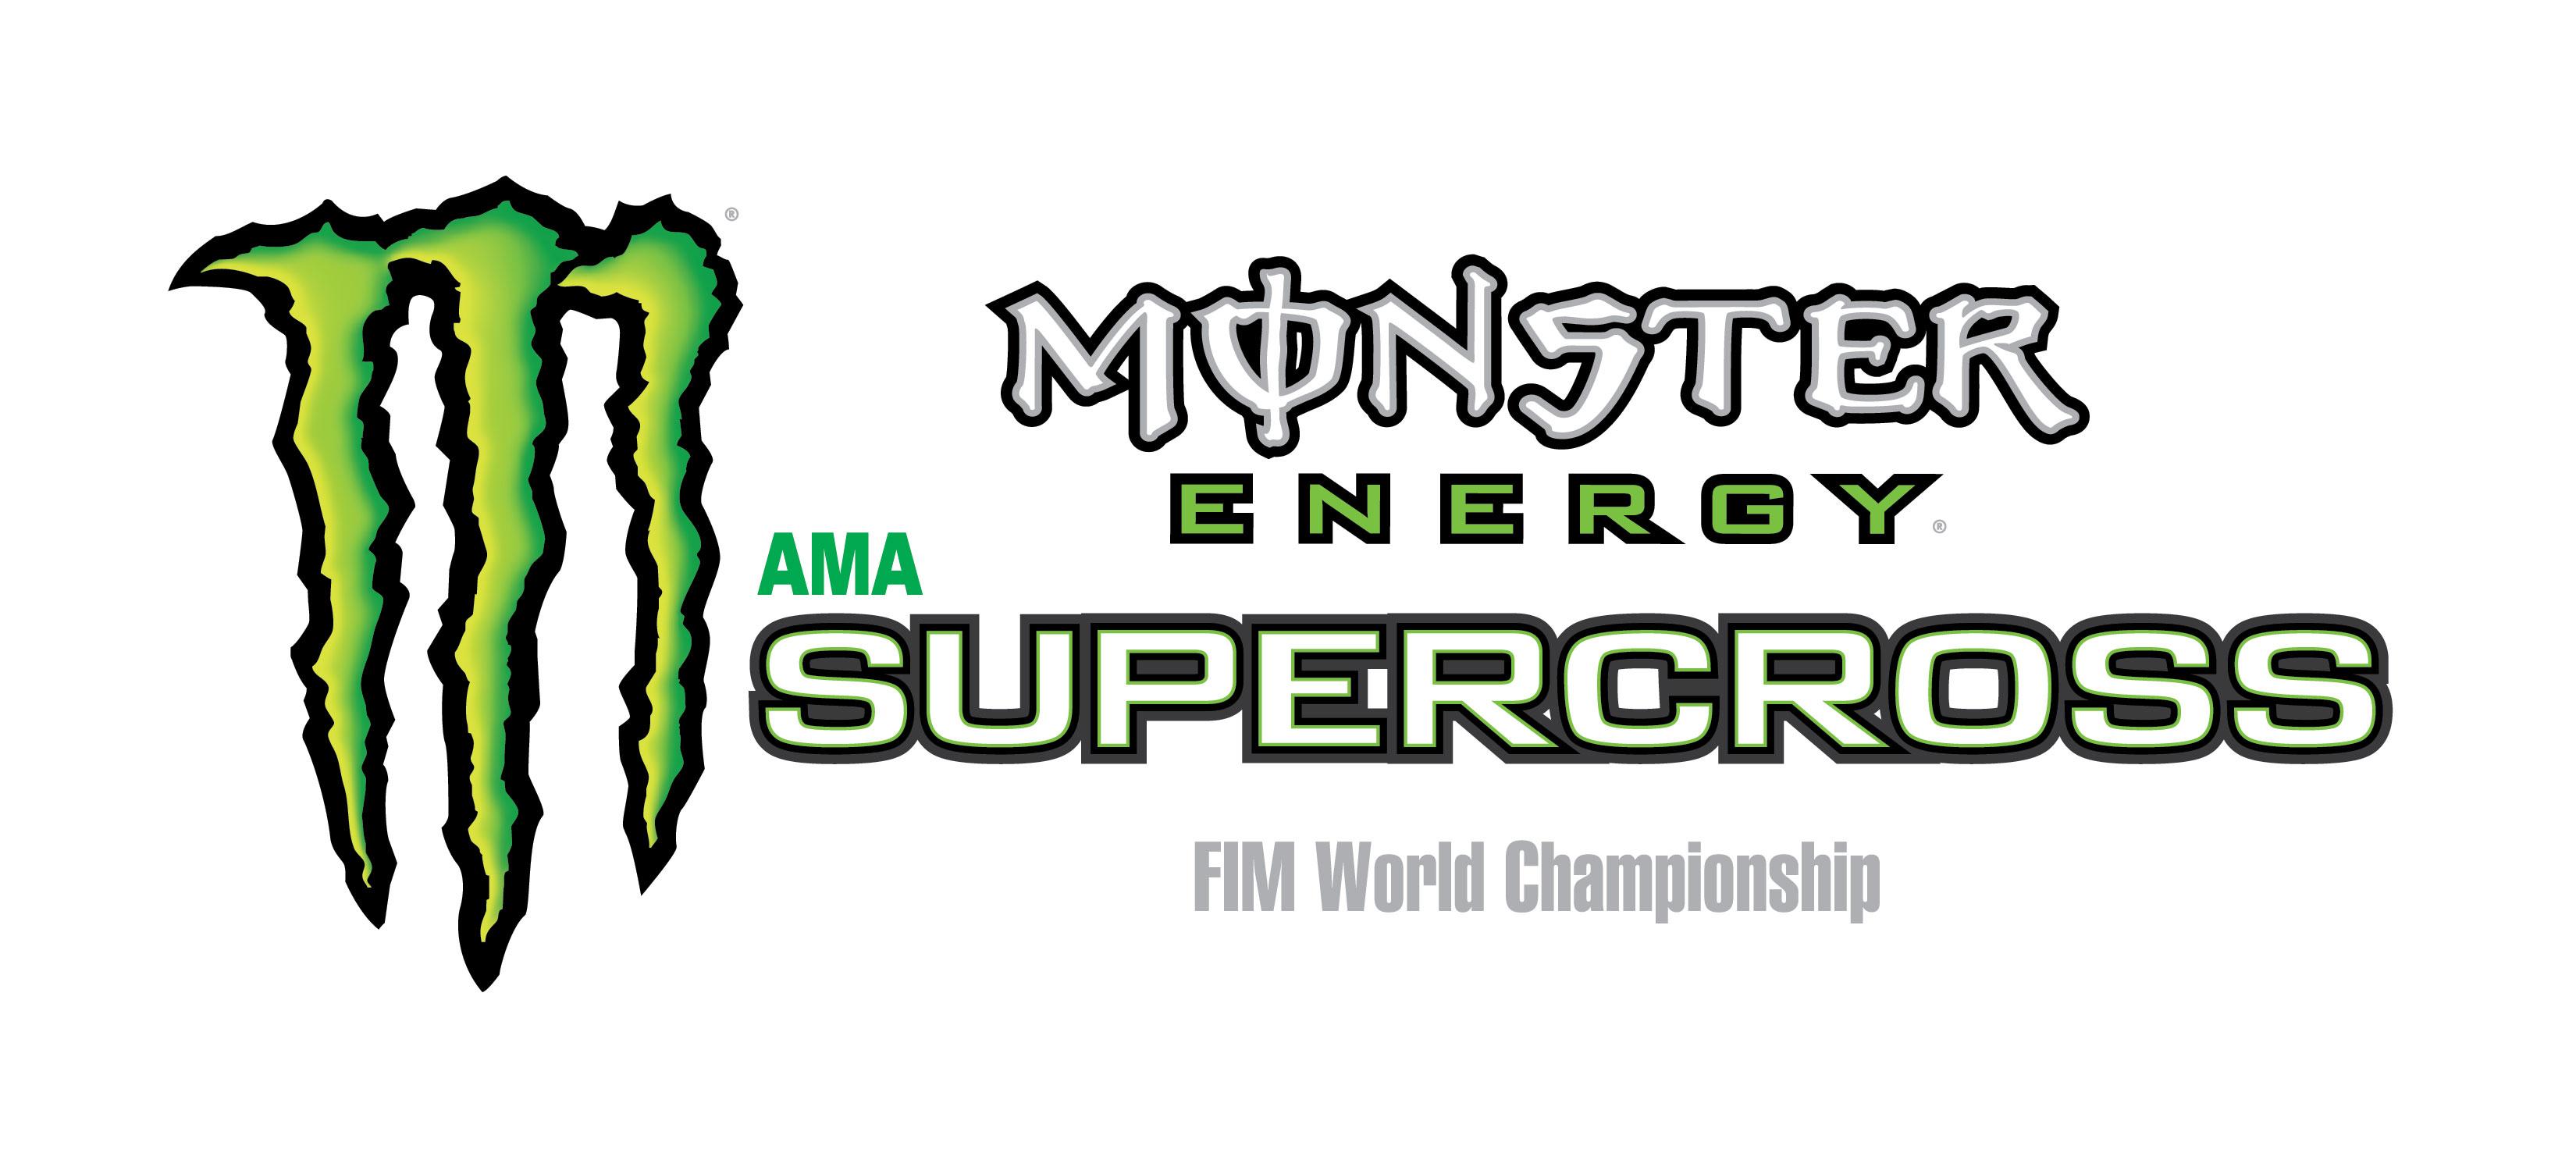 Monster Energy Supercross Logo - Monster Energy AMA Supercross Finals an Exciting Family Event